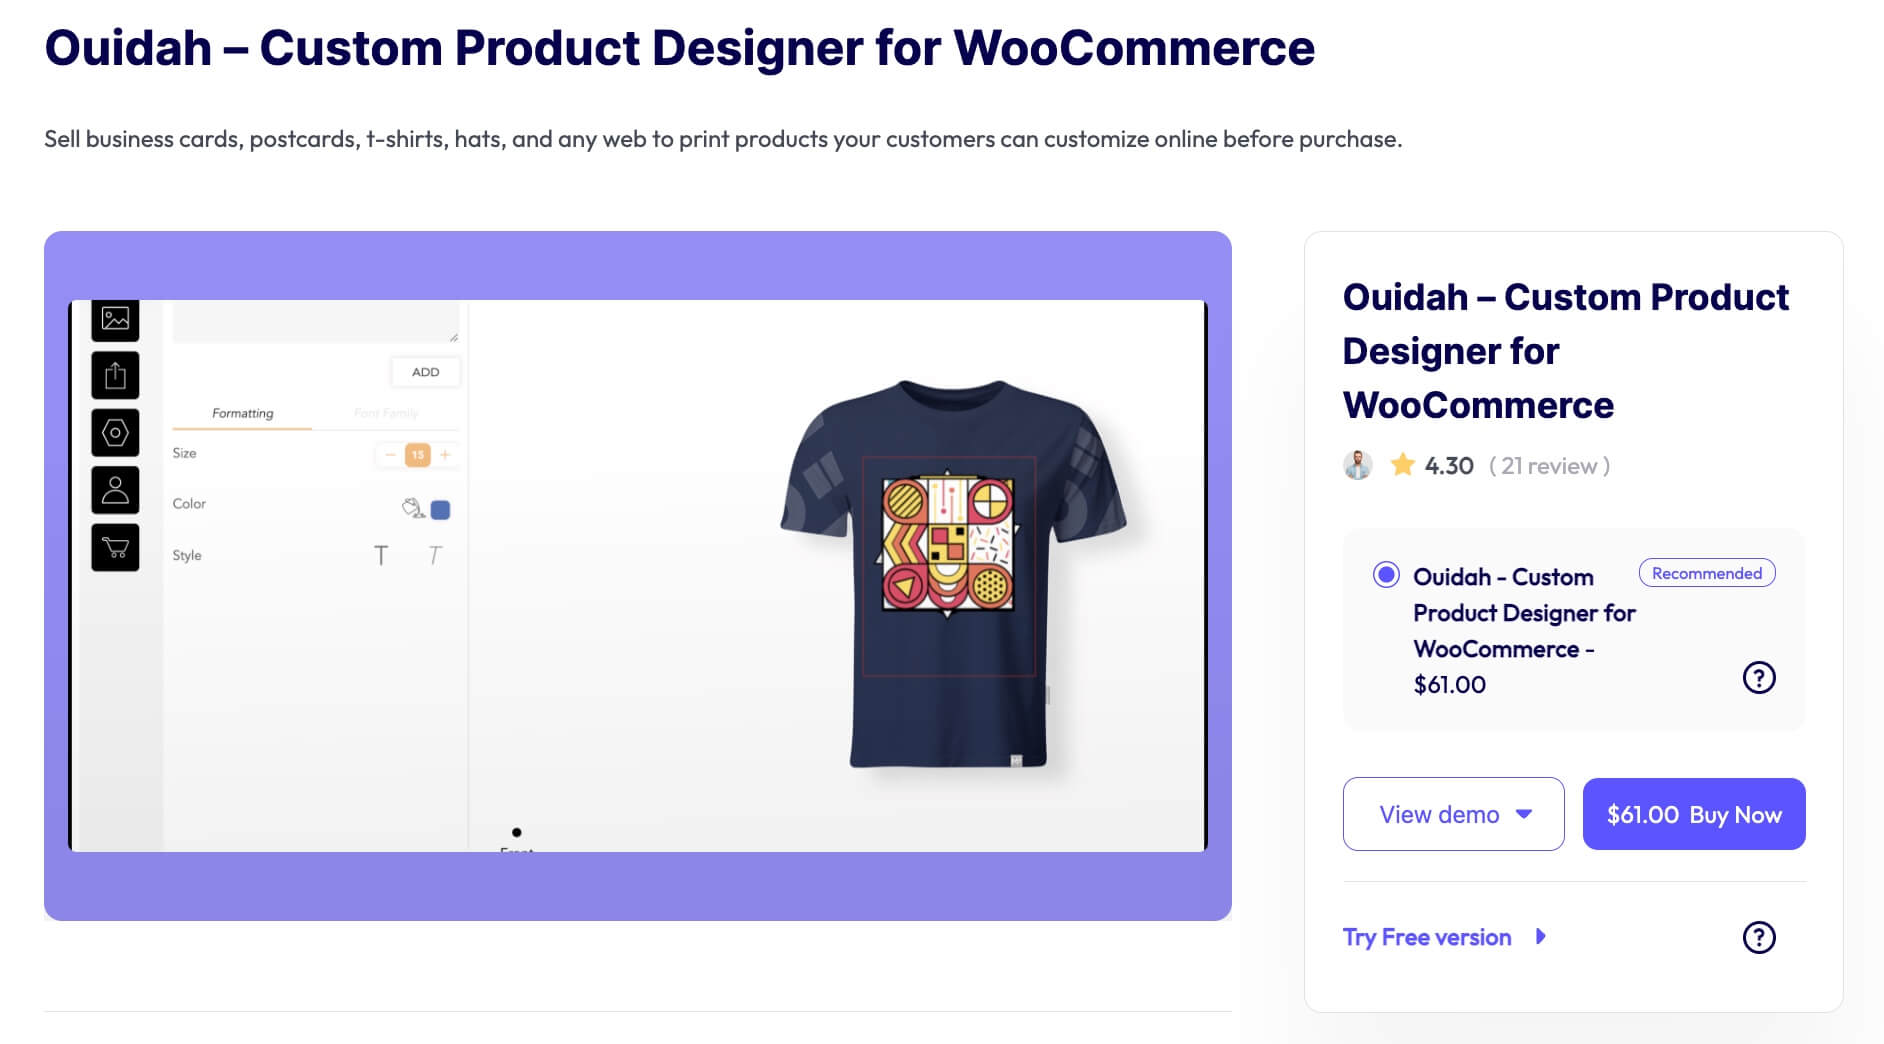 Ouidah – Custom Product Designer for WooCommerce by orionorigin